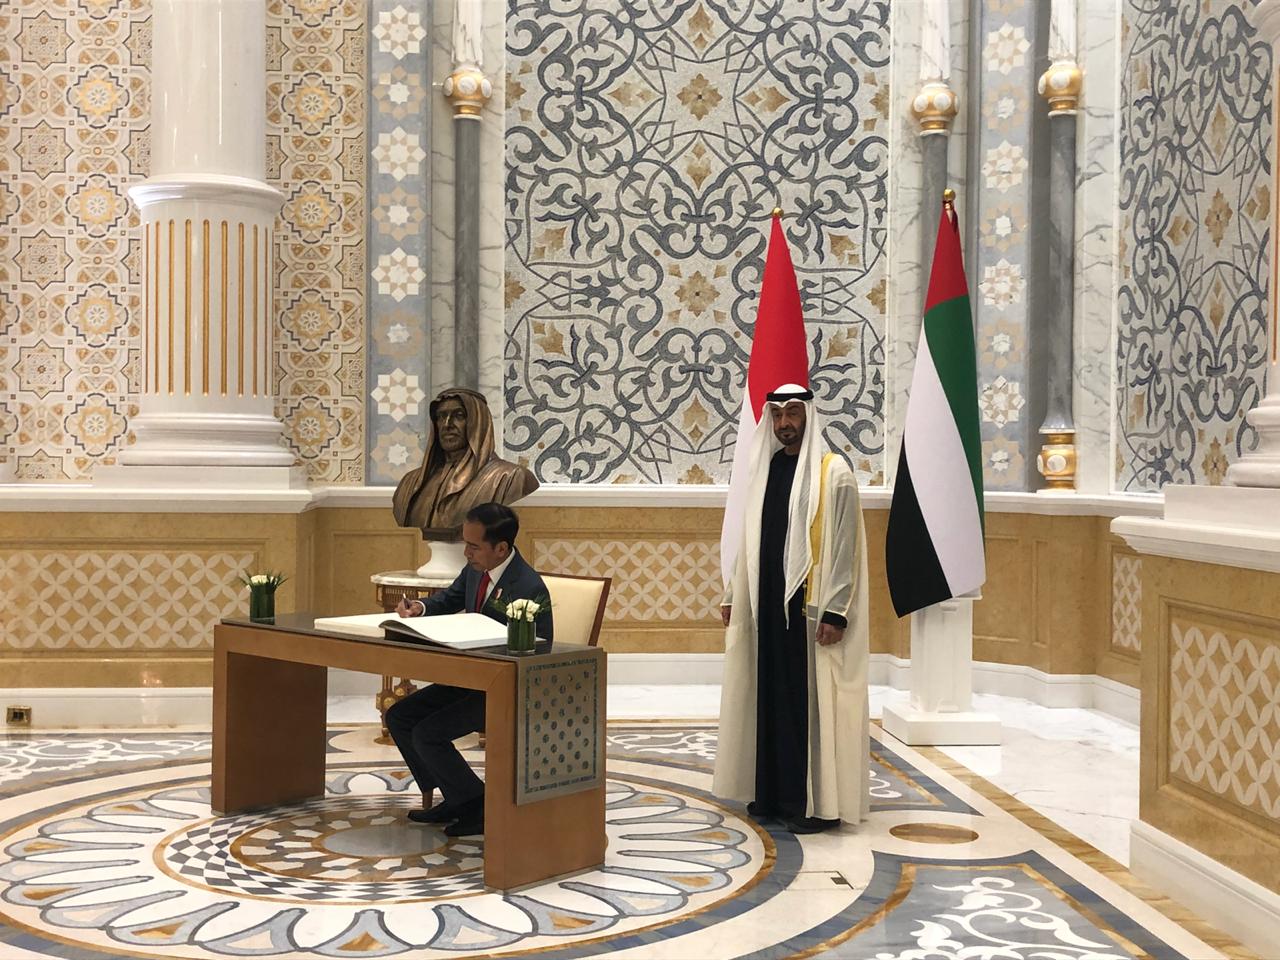 Disaksikan Pangeran Sheikh Mohammed Bin Zayed, Presiden Jokowi mengisi buku tamu saat tiba di Istana Qasr Al Watan, Abu Dhabi, UEA, Minggu (12/1) petang waktu setempat. (Foto: BPMI Setpres)